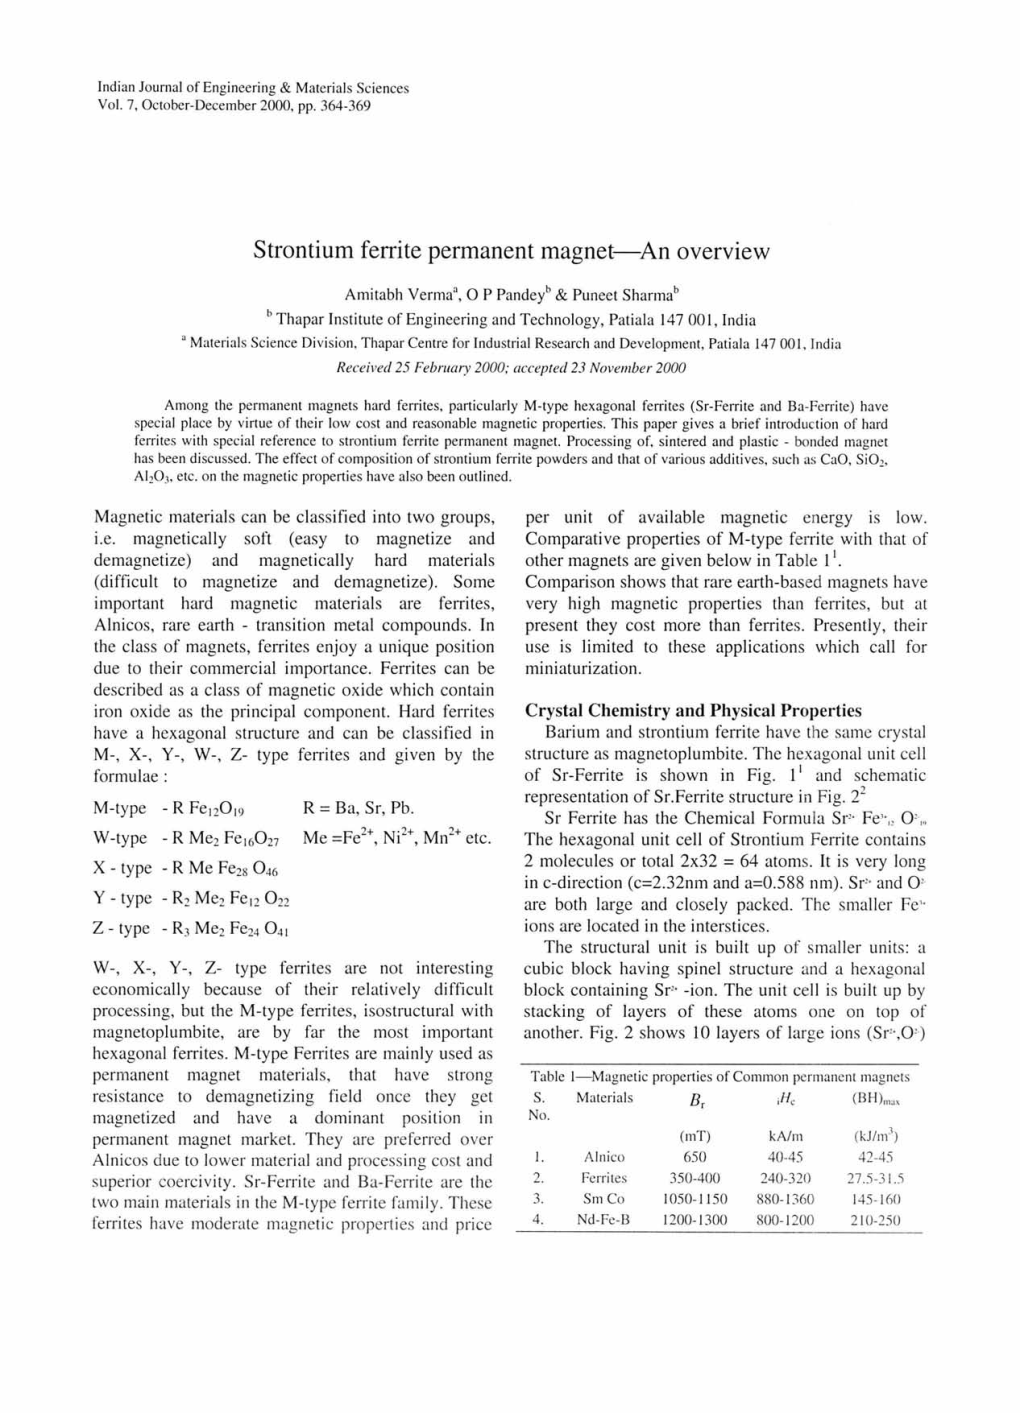 Strontium Ferrite Permanent Magnet-An Overview